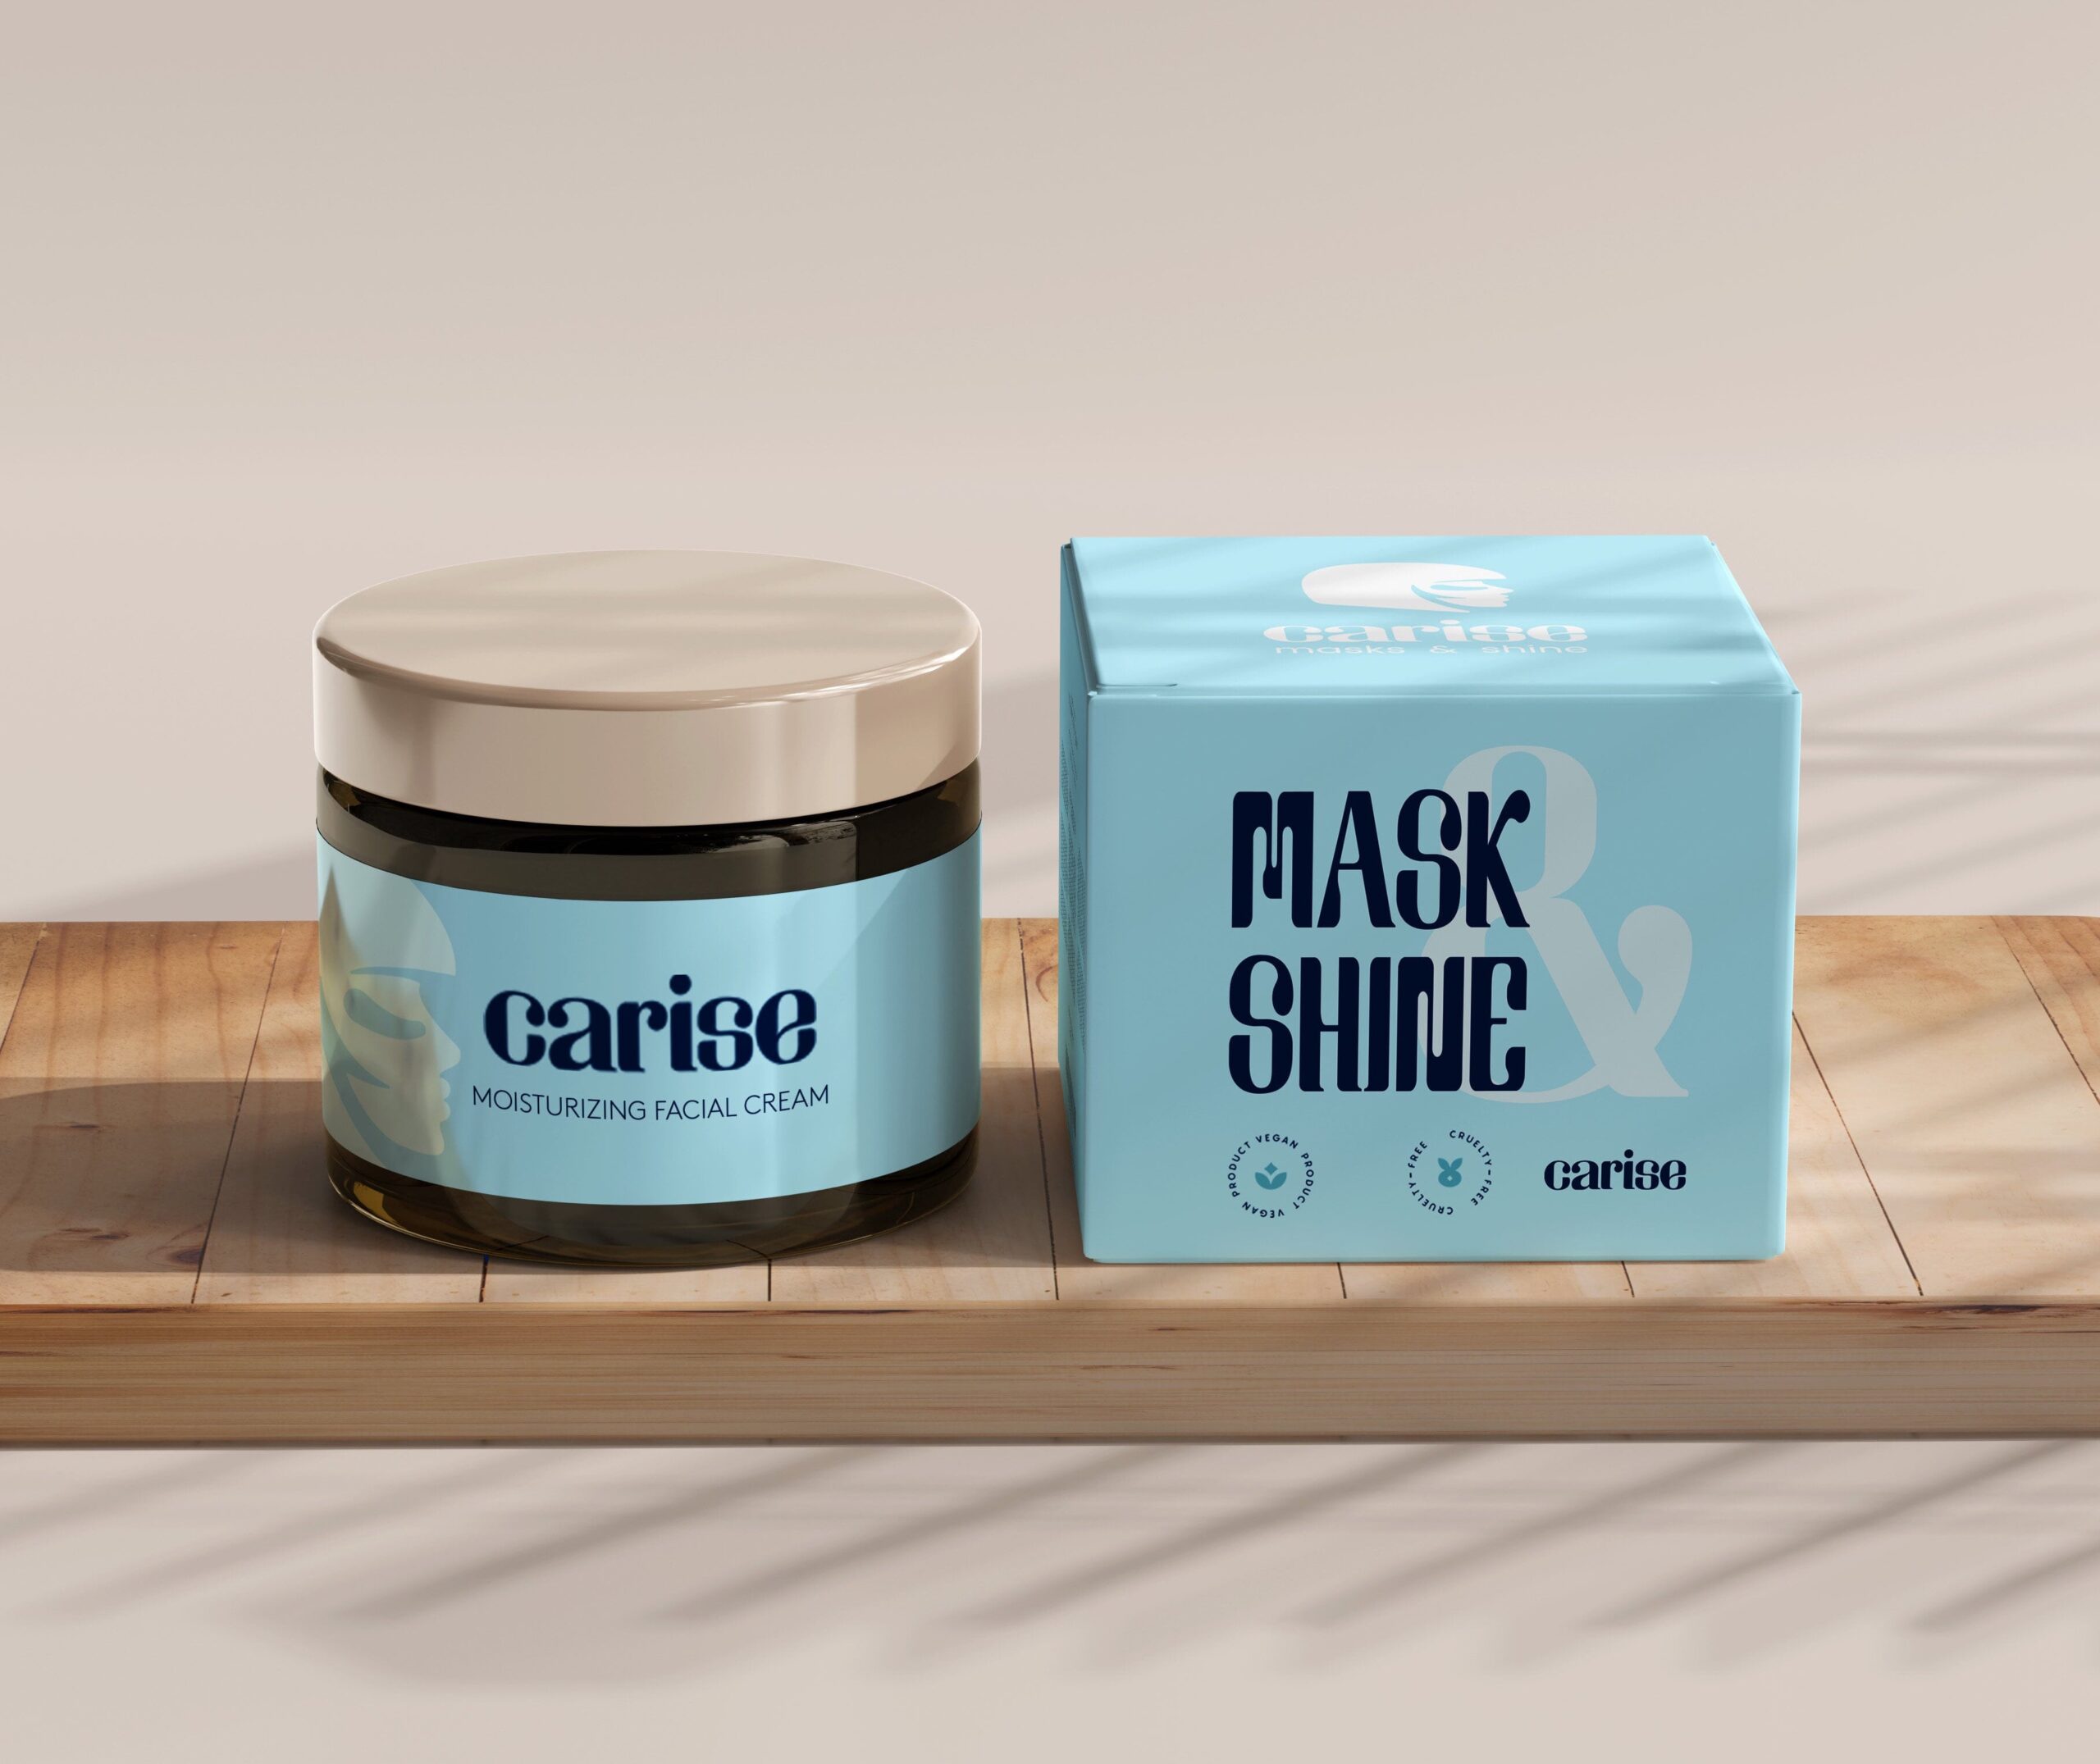 moisturizing facial crema pot and packaging box made of sky blue cardboard.